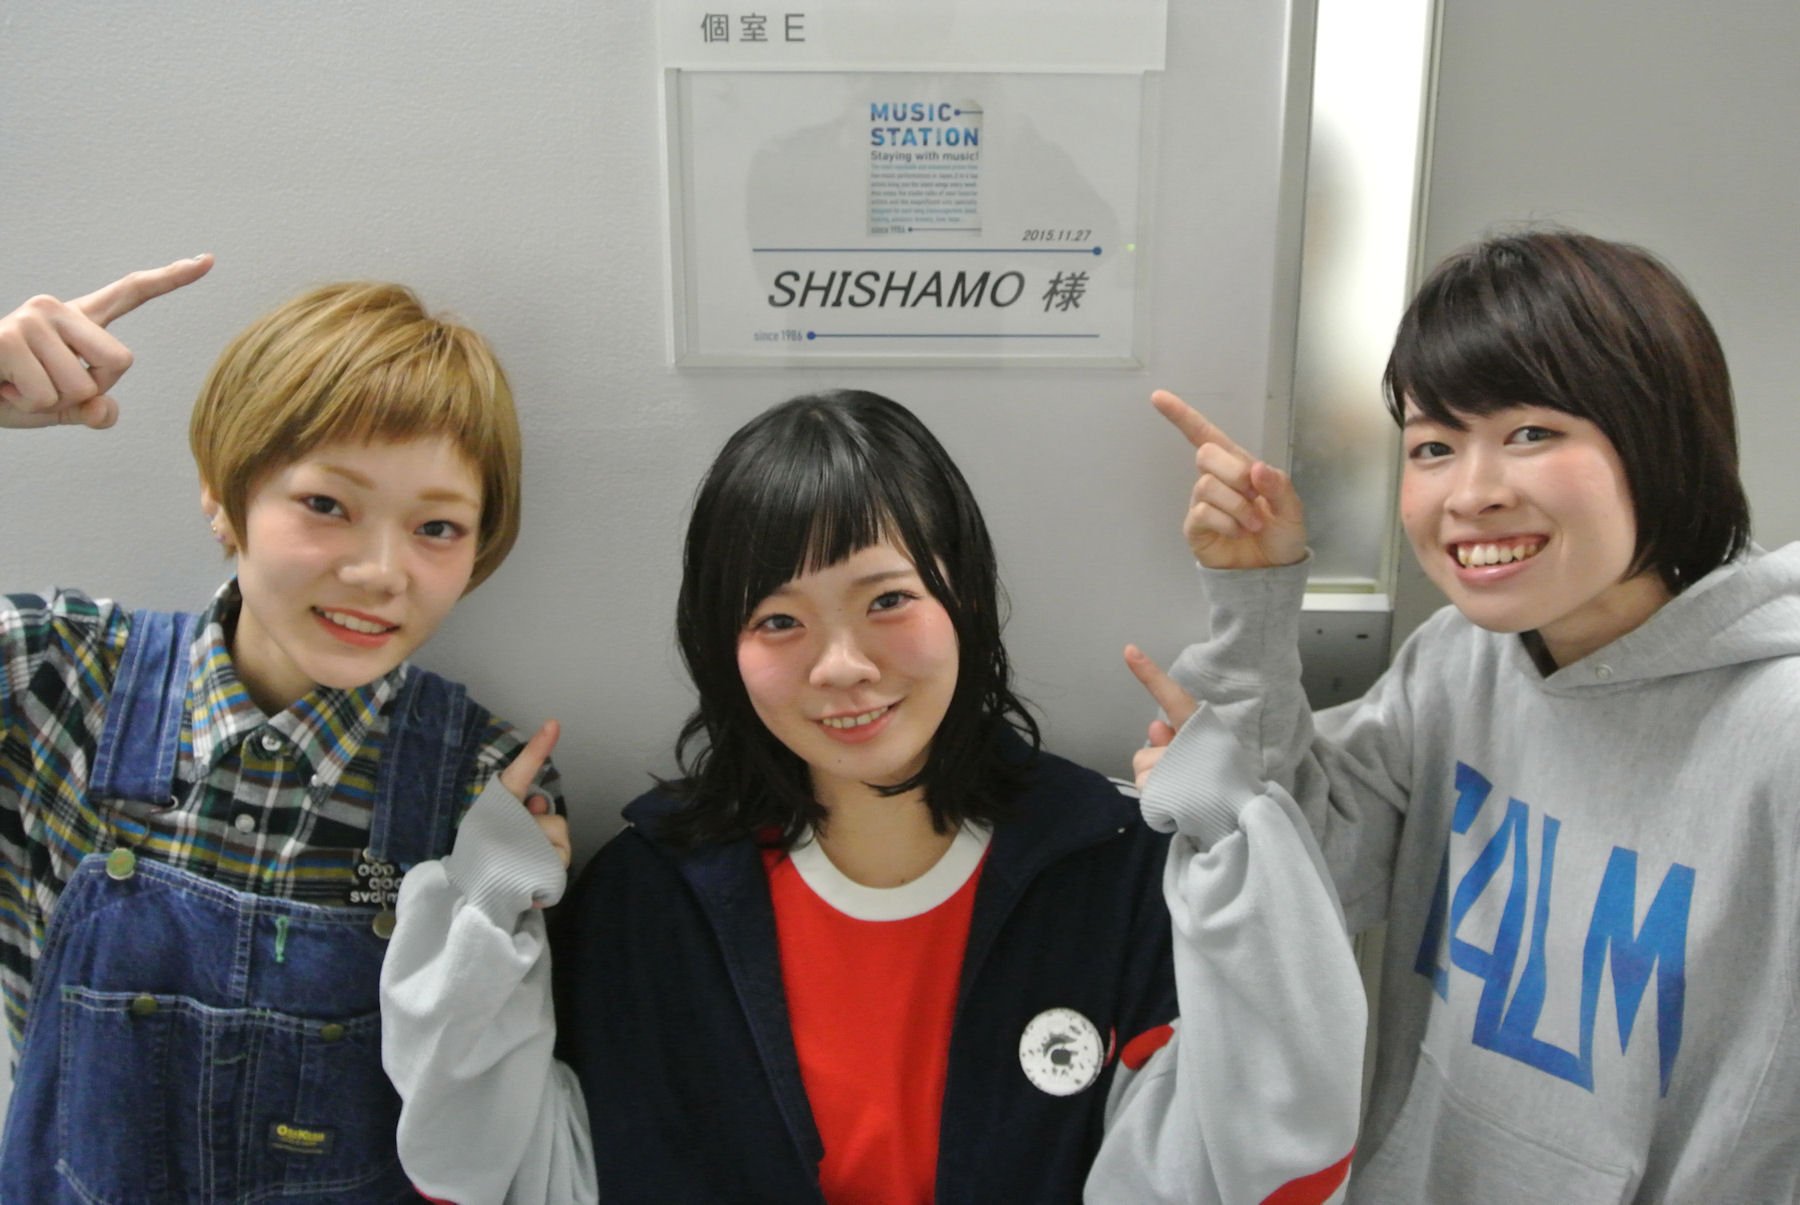 Music Station Pa Twitter まもなくshishamo 音楽業界が注目する 川崎で結成された女性3人組ロックバンド 今夜ｍステ初登場 Mステ T Co Zcrk9natev Twitter